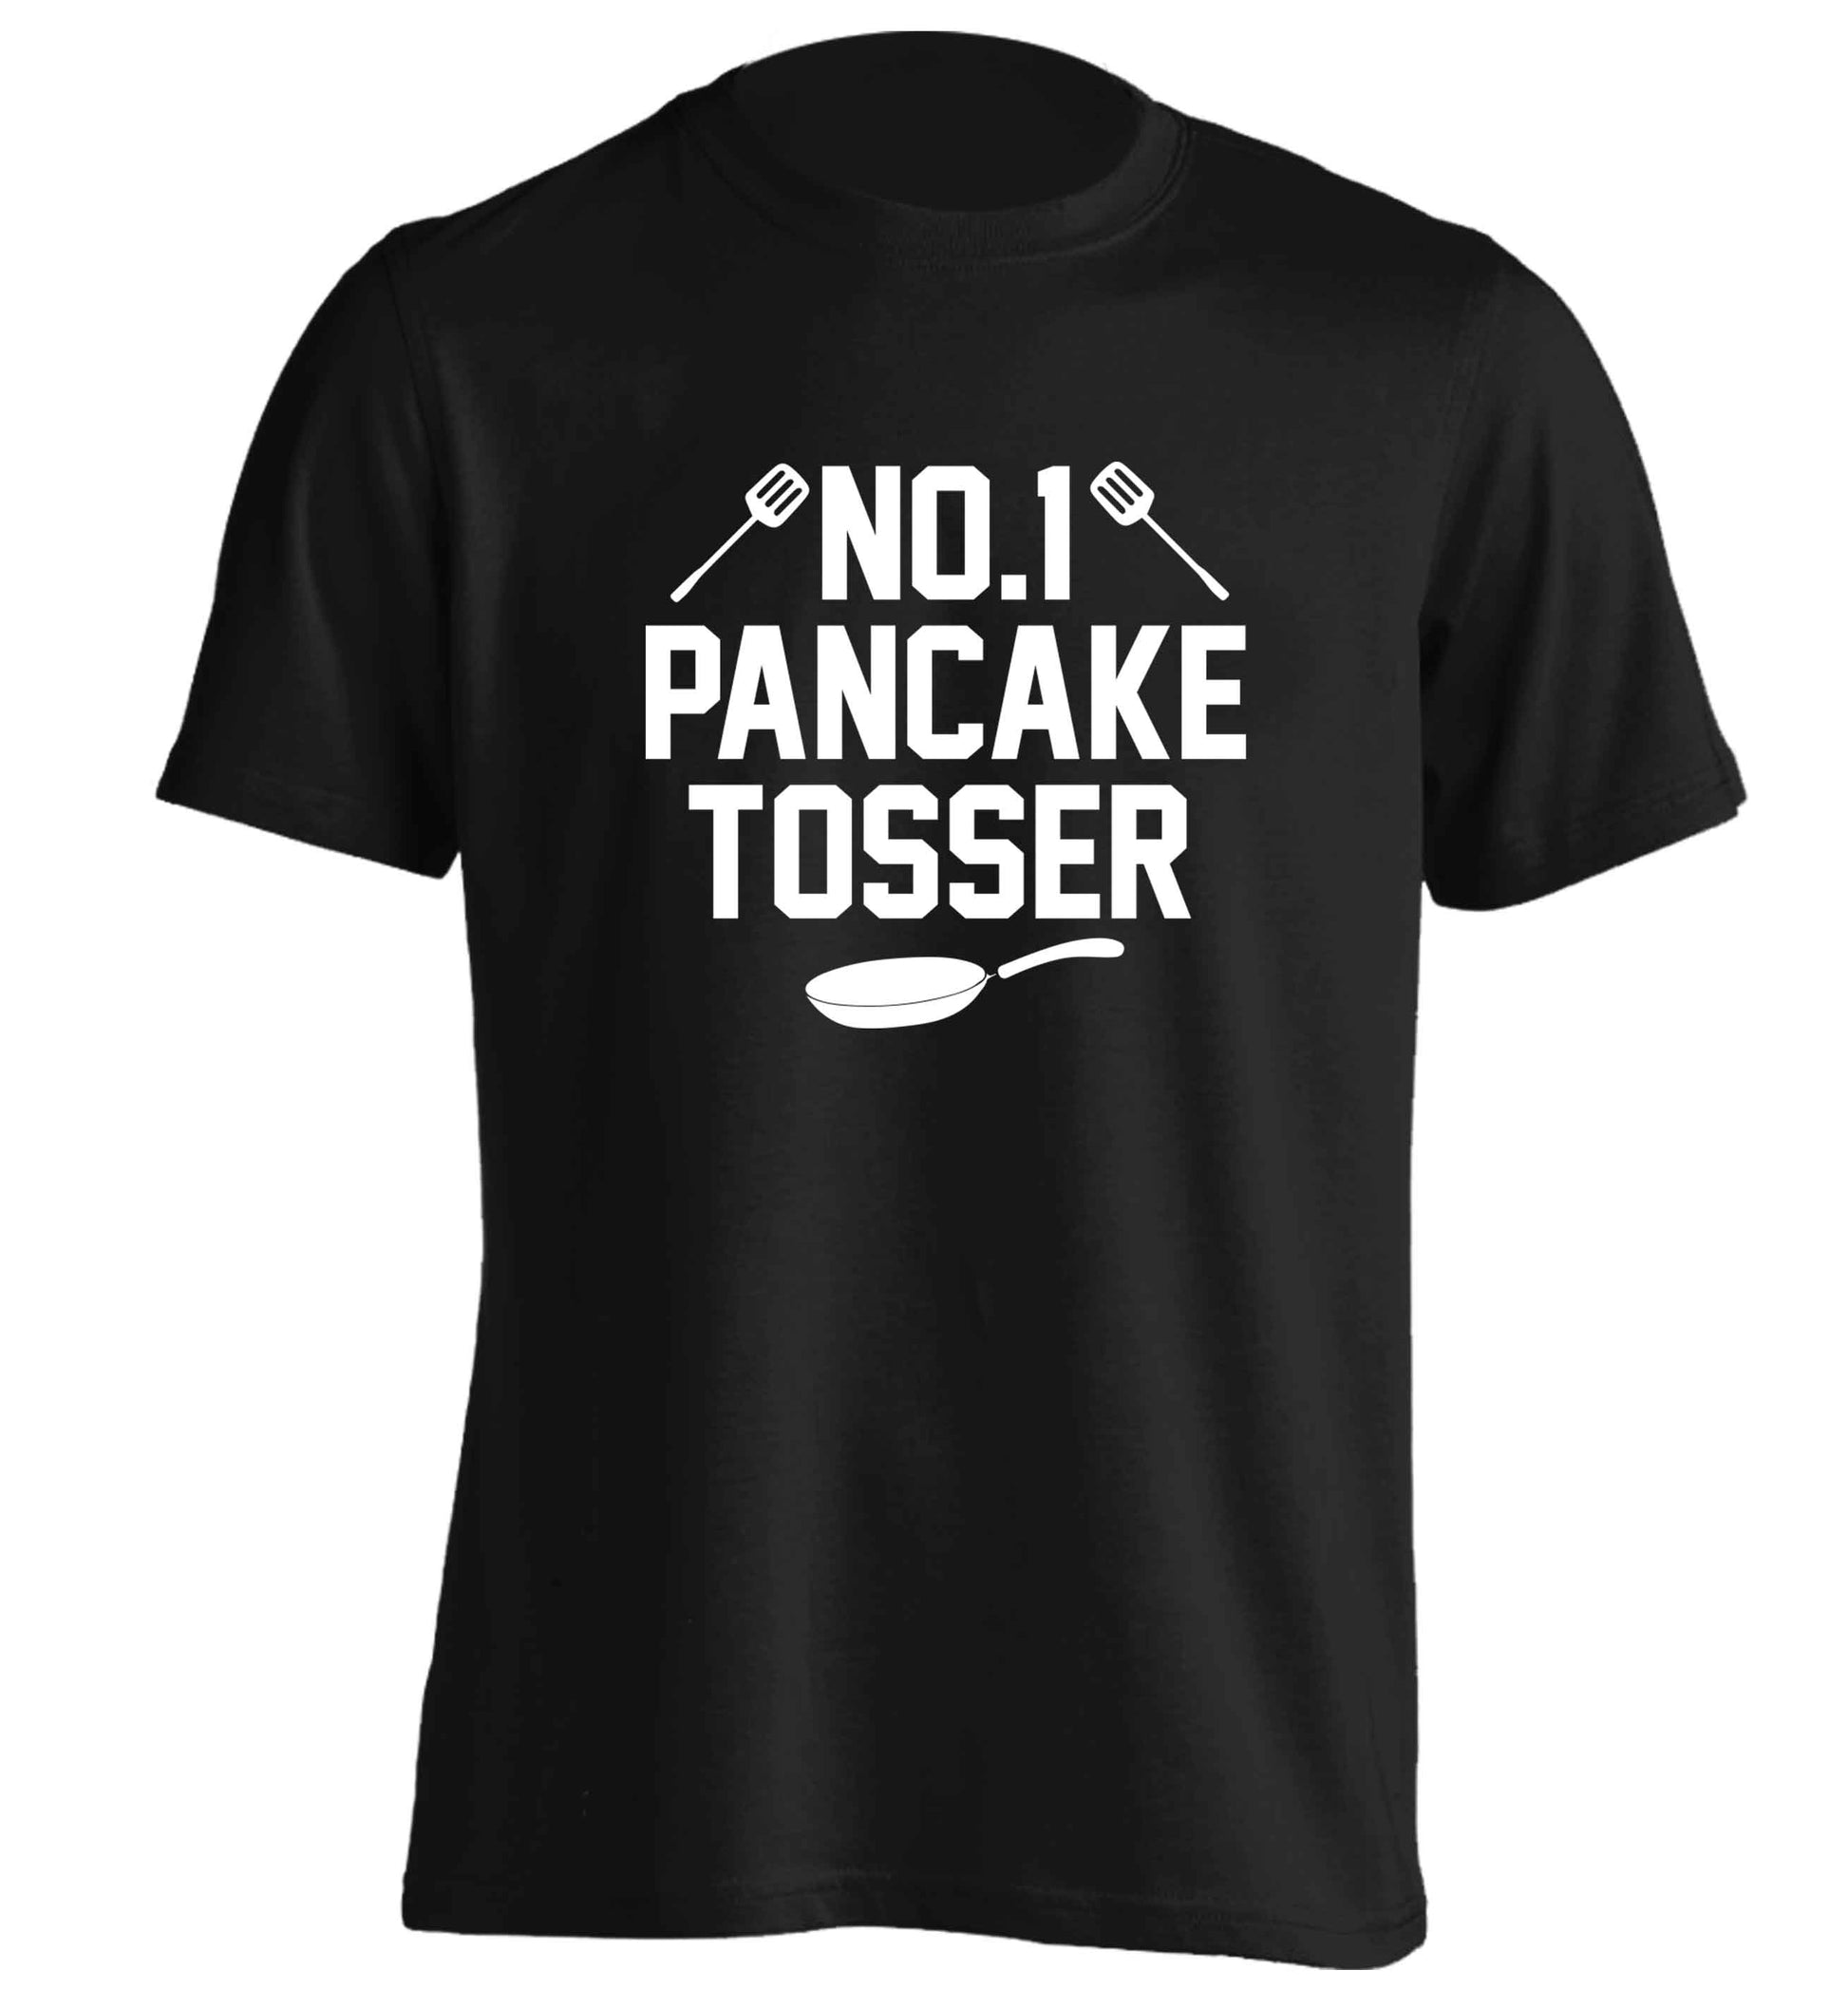 No.1 Pancake tosser adults unisex black Tshirt 2XL